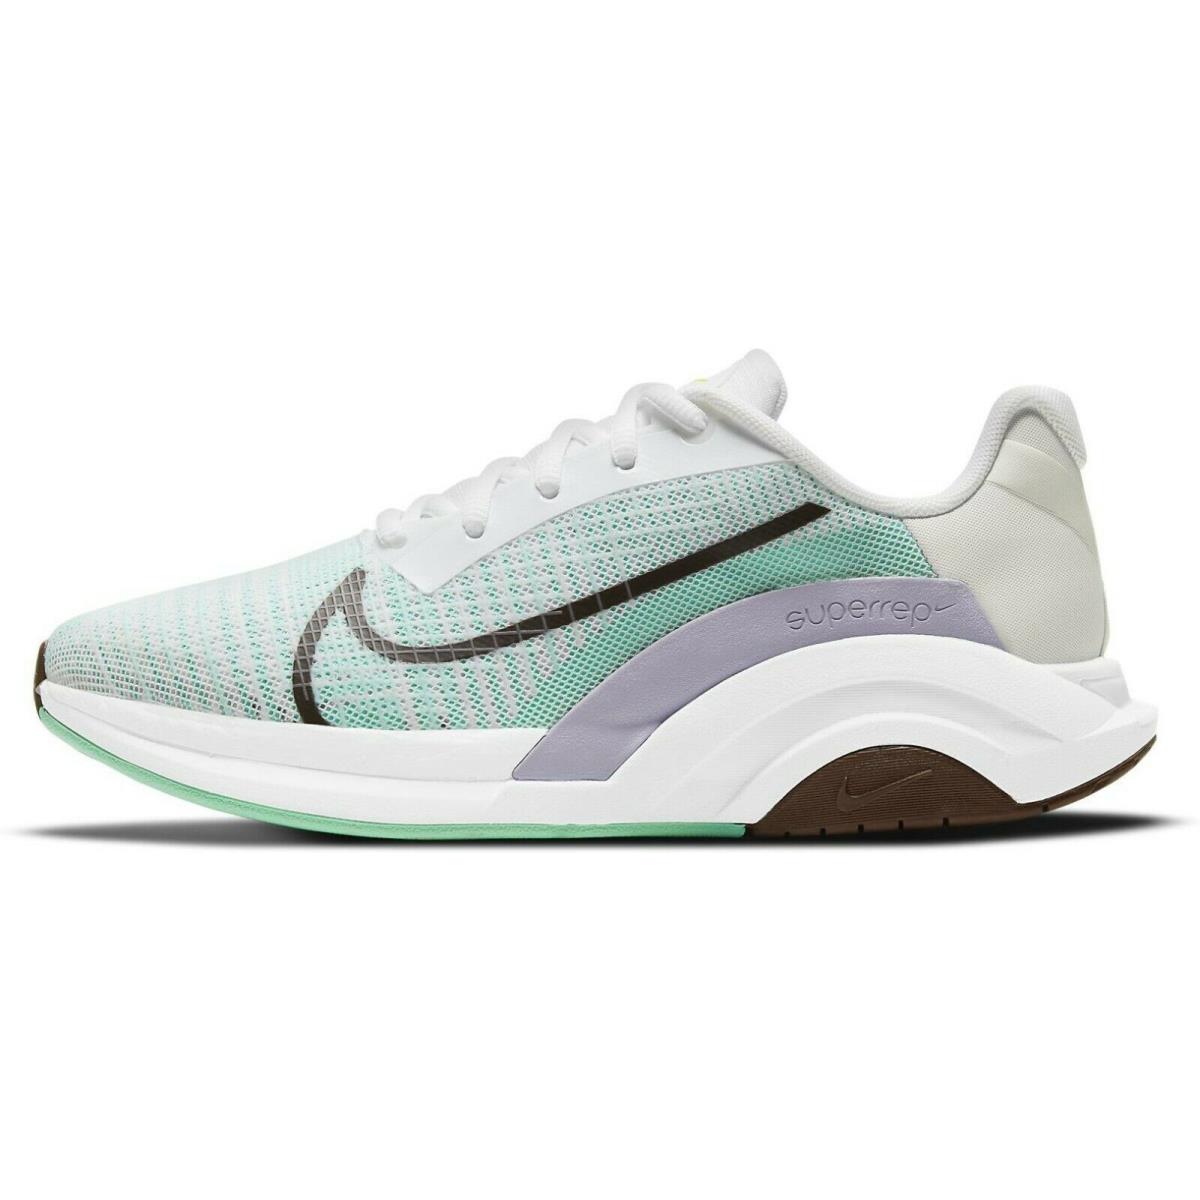 Nike Women`s Zoomx Superrep Surge Running Shoes White Green CK9406 135 - White